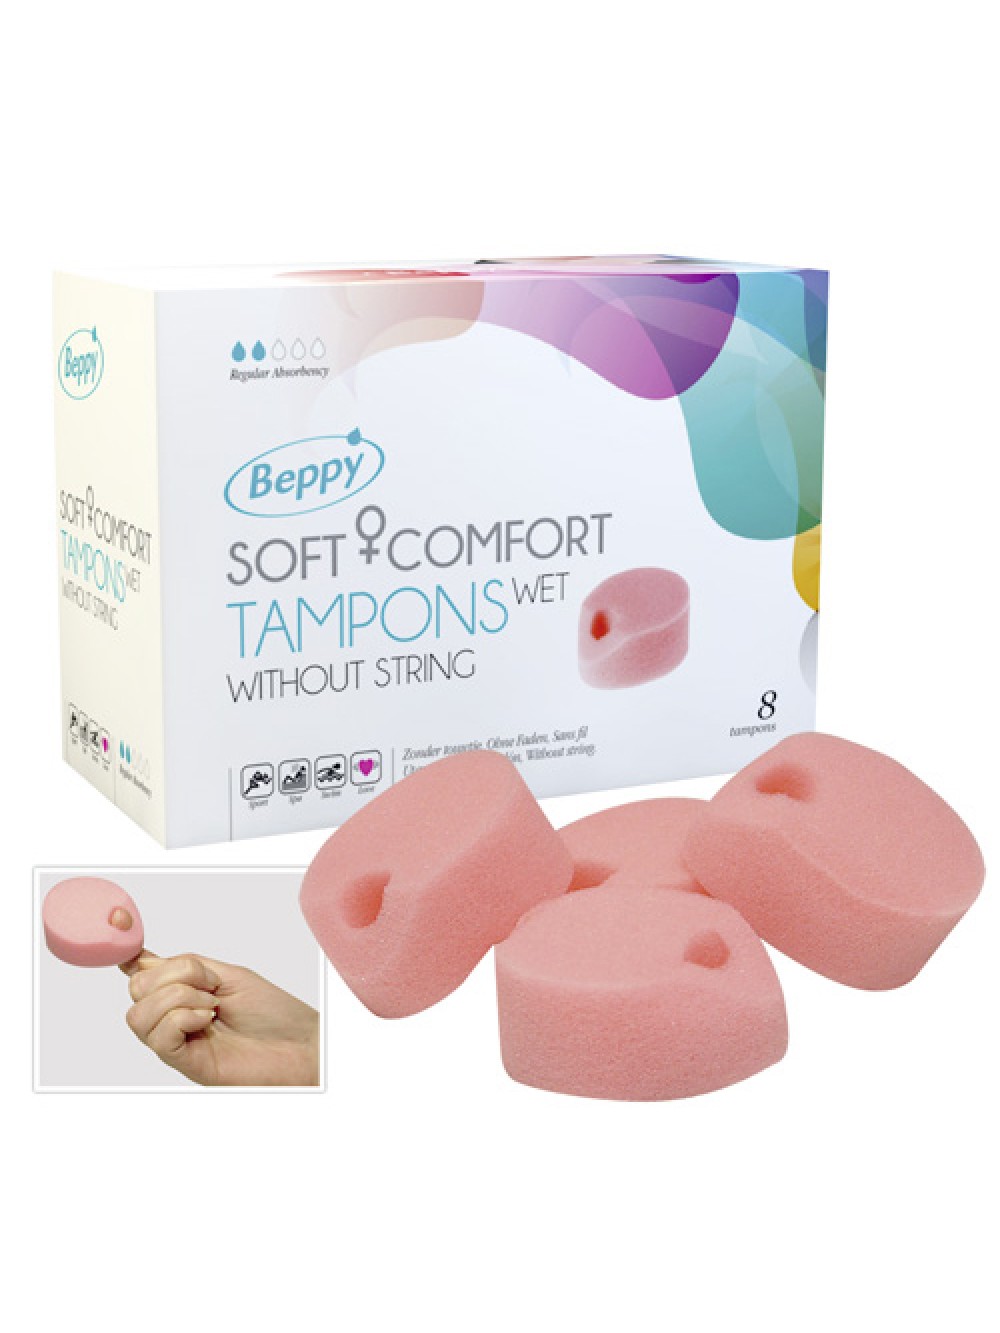 Beppy - Wet Tampons - 8 pcs 8714777000355